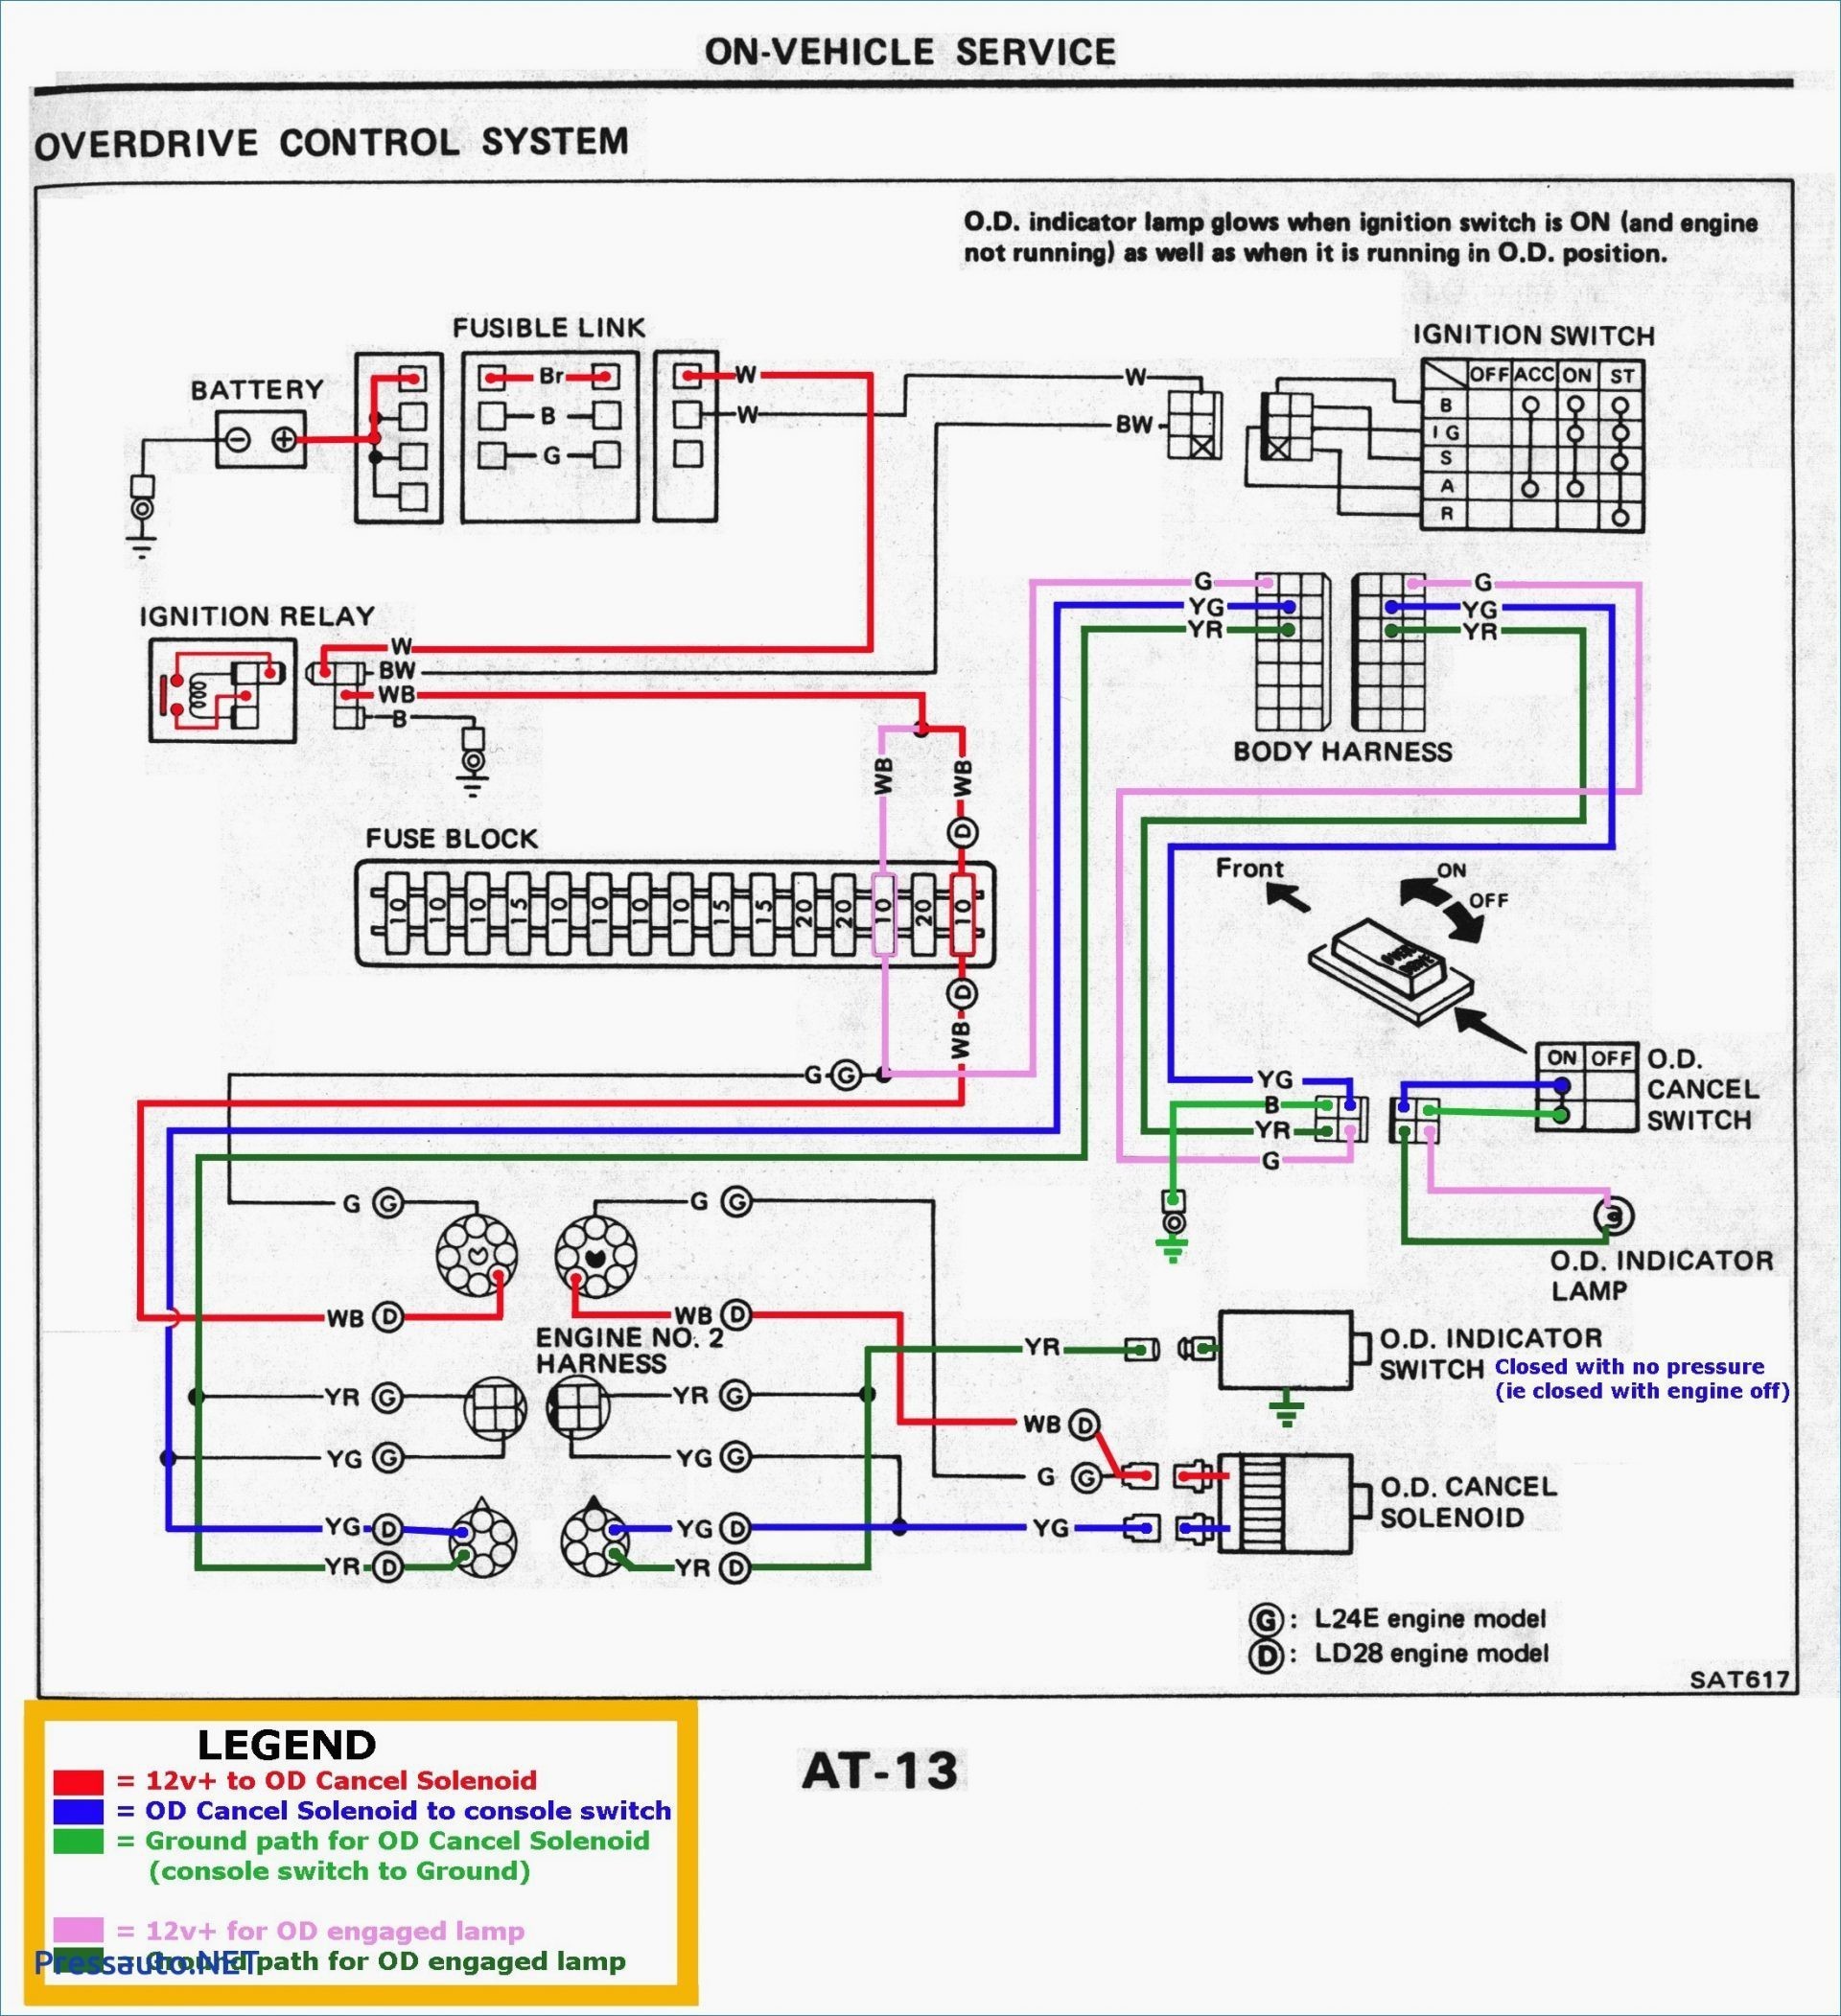 2000 F250 Tail Light Wiring Diagram â¦diagram Basedâ¦ Chevy Truck Tail Light Wiring Diagram